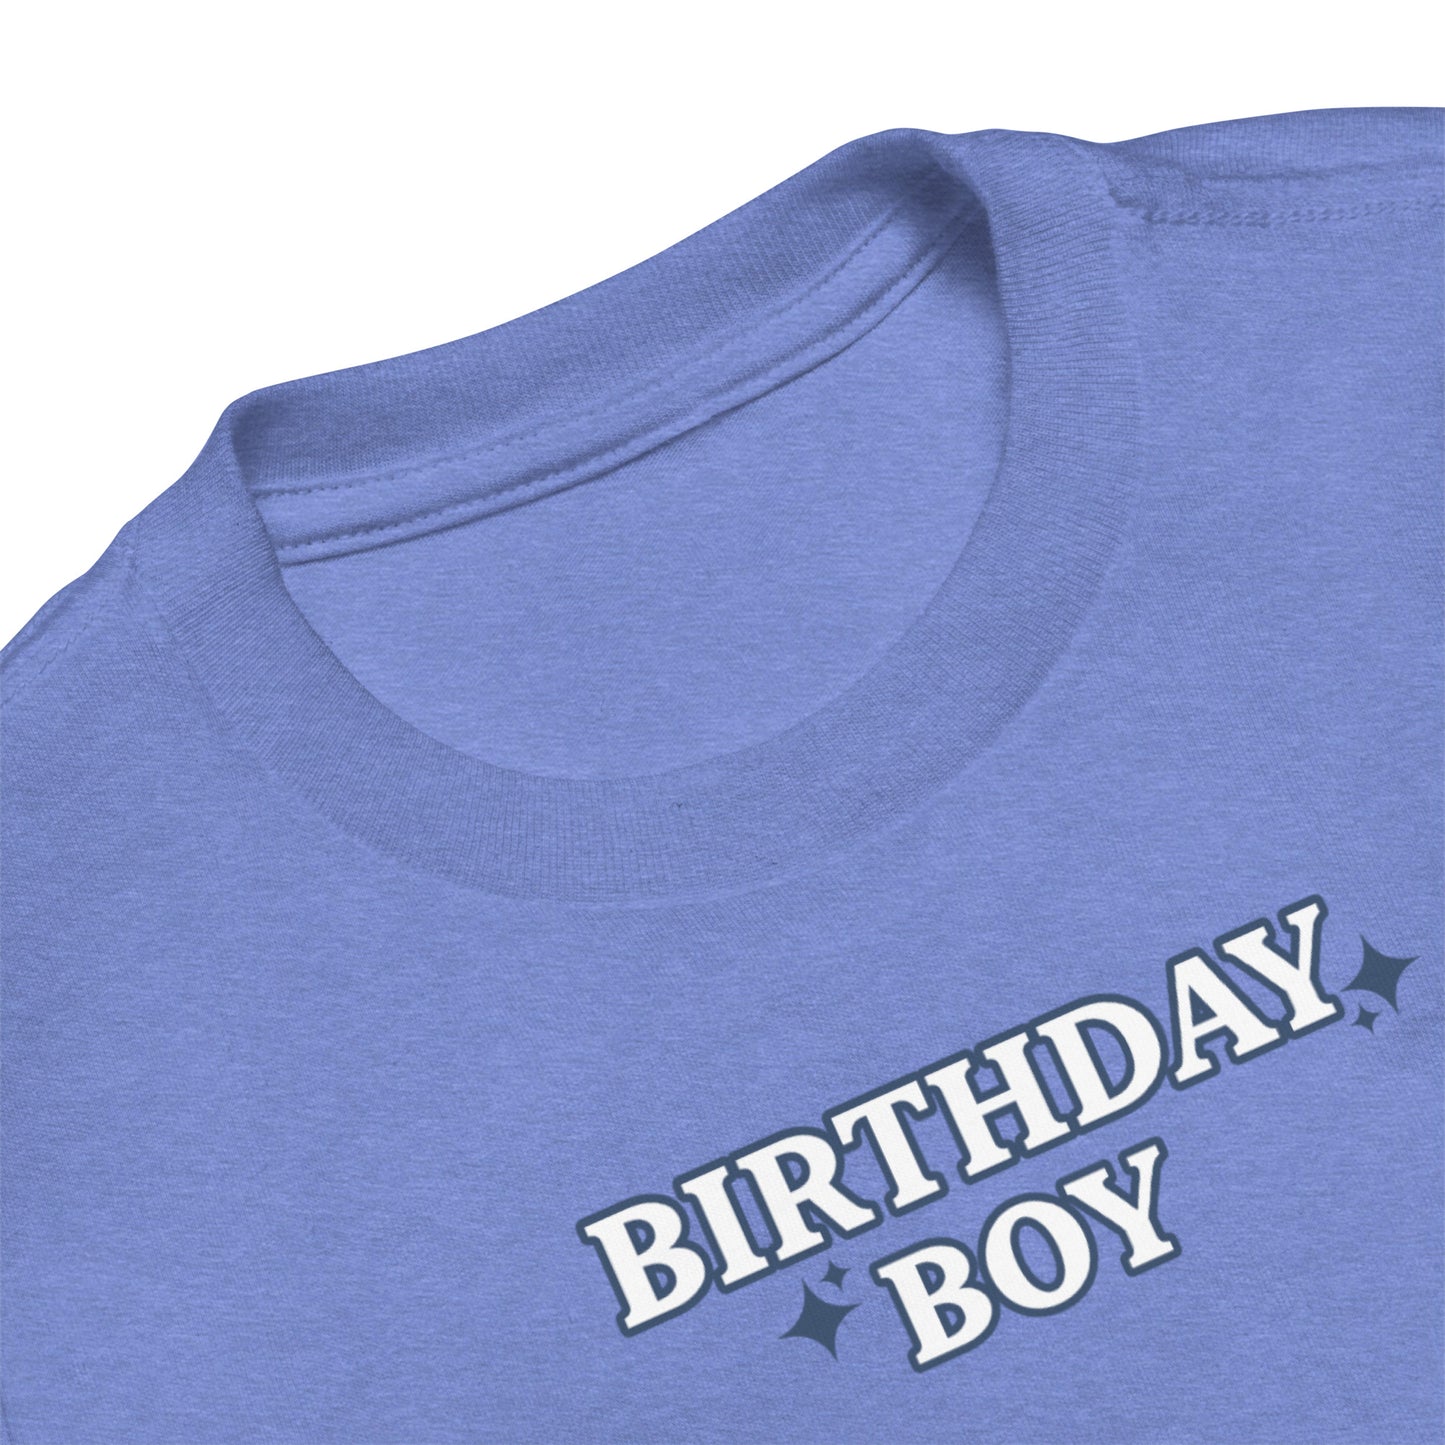 Birthday Boy | T-Shirt | Toddler